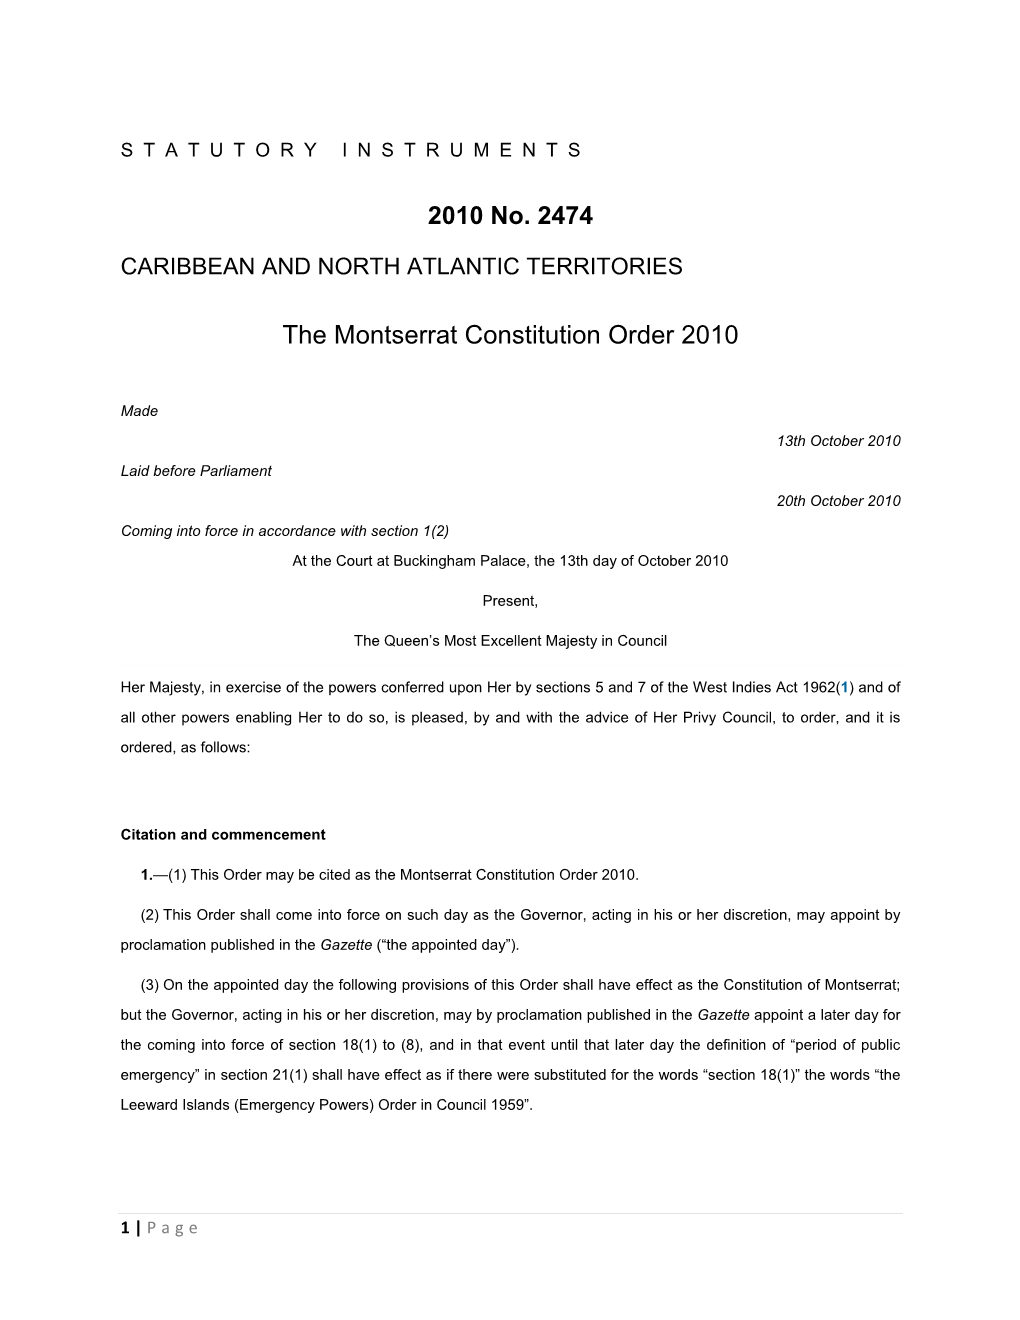 The Montserrat Constitution Order 2010